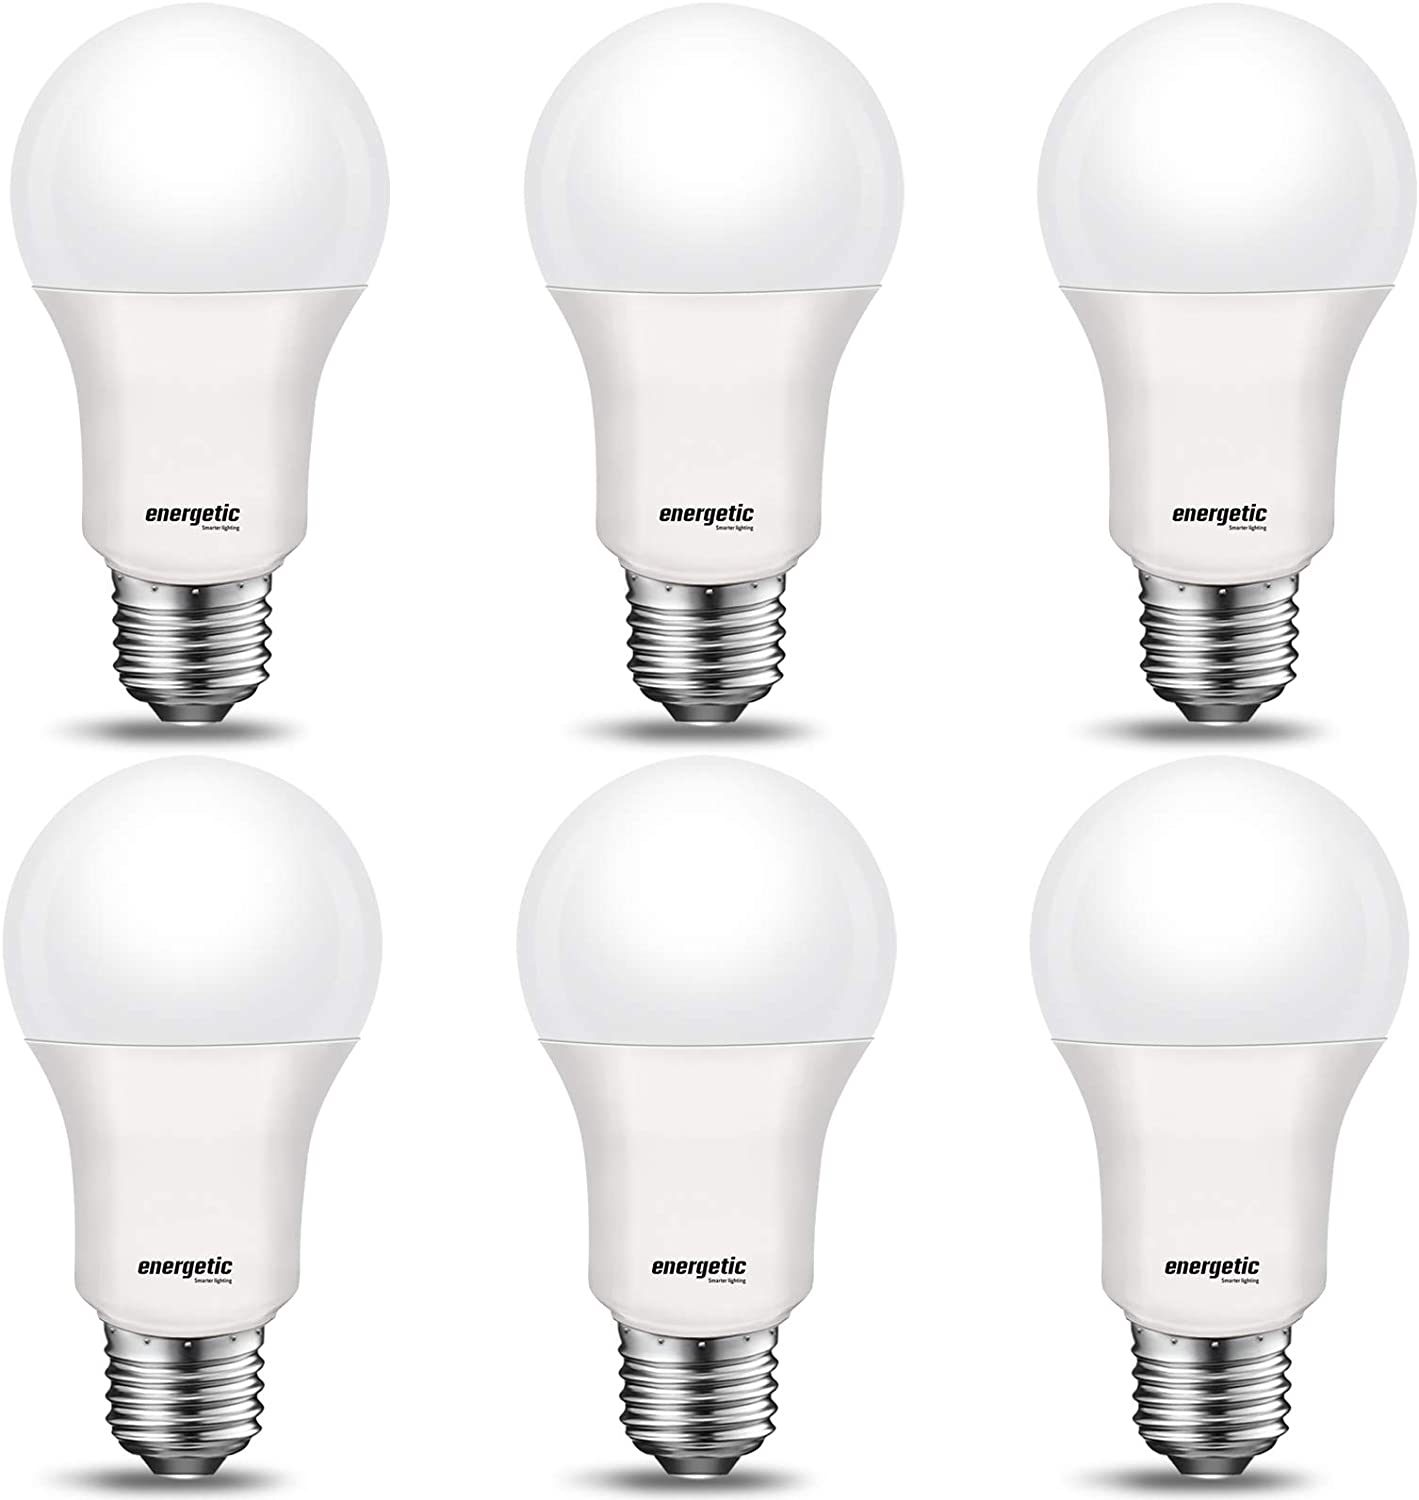 100W Equivalent A19 LED Light Bulb, E26 Standard Base